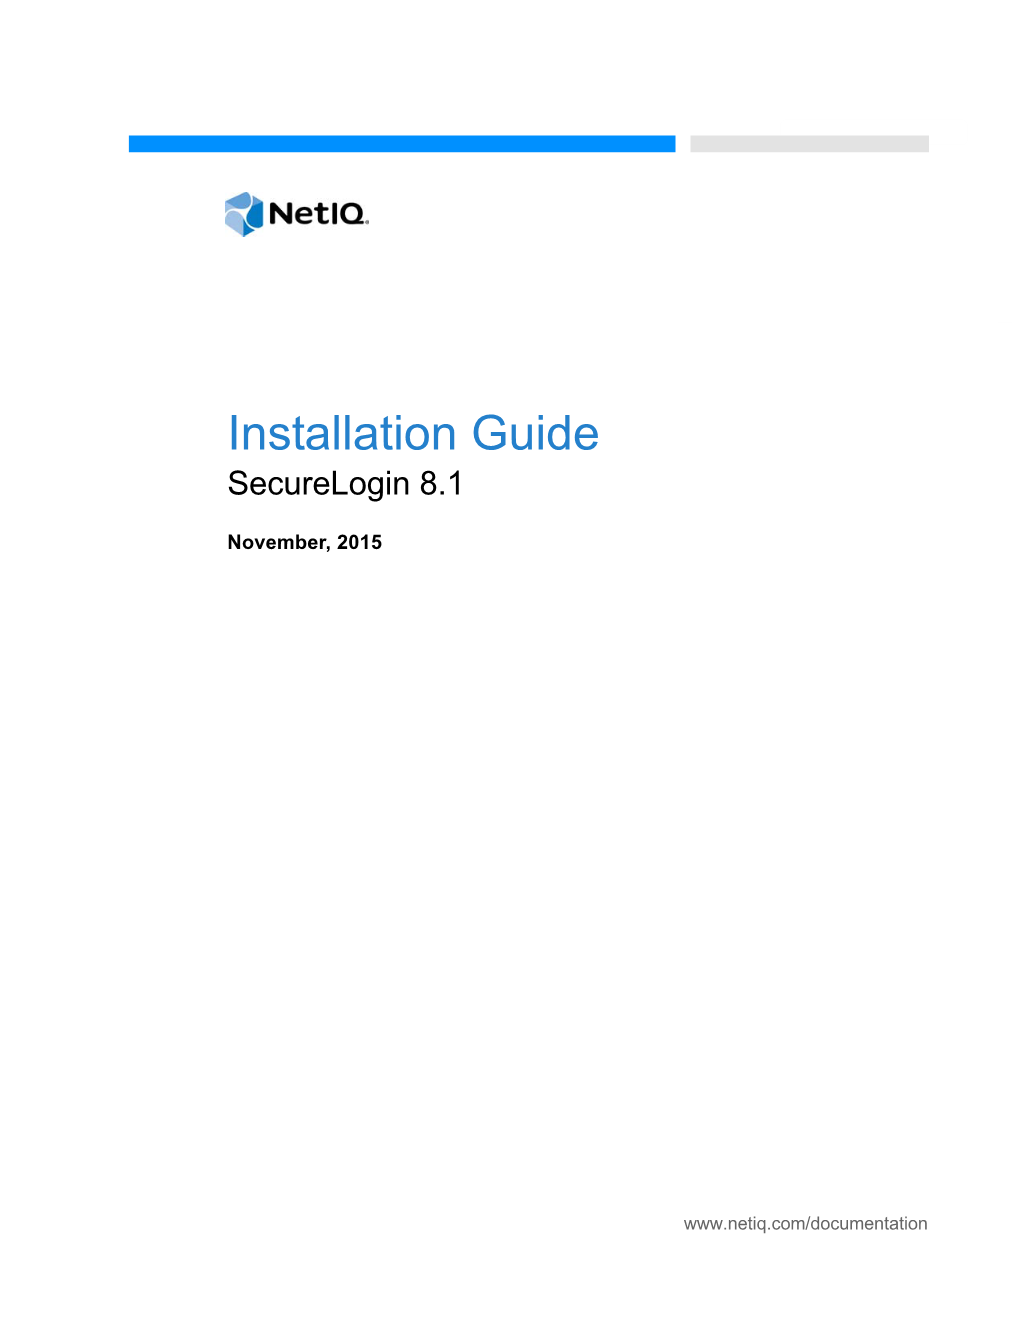 Netiq Securelogin Installation Guide 8.2.5 Installing in Standalone Environment